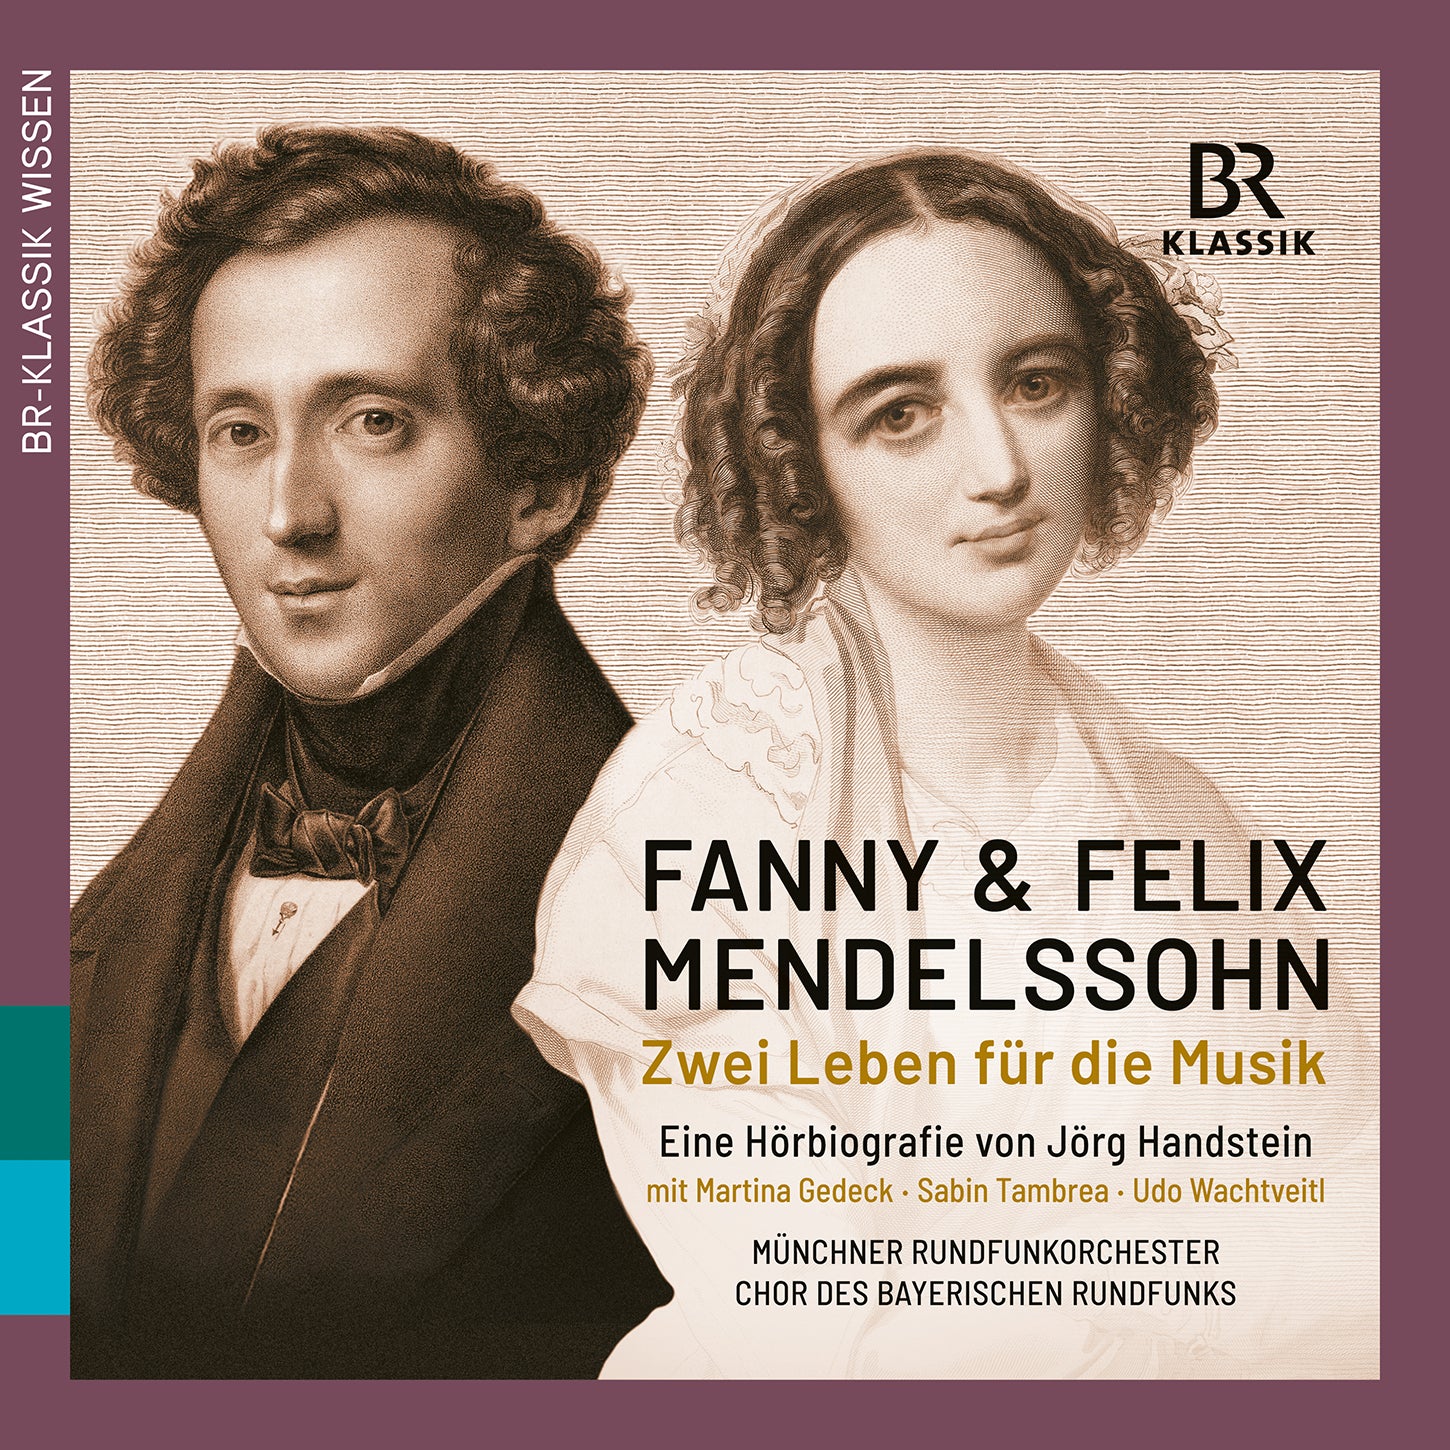 Fanny & Felix Mendelssohn: Two Lives for Music / Munich Radio Orchestra